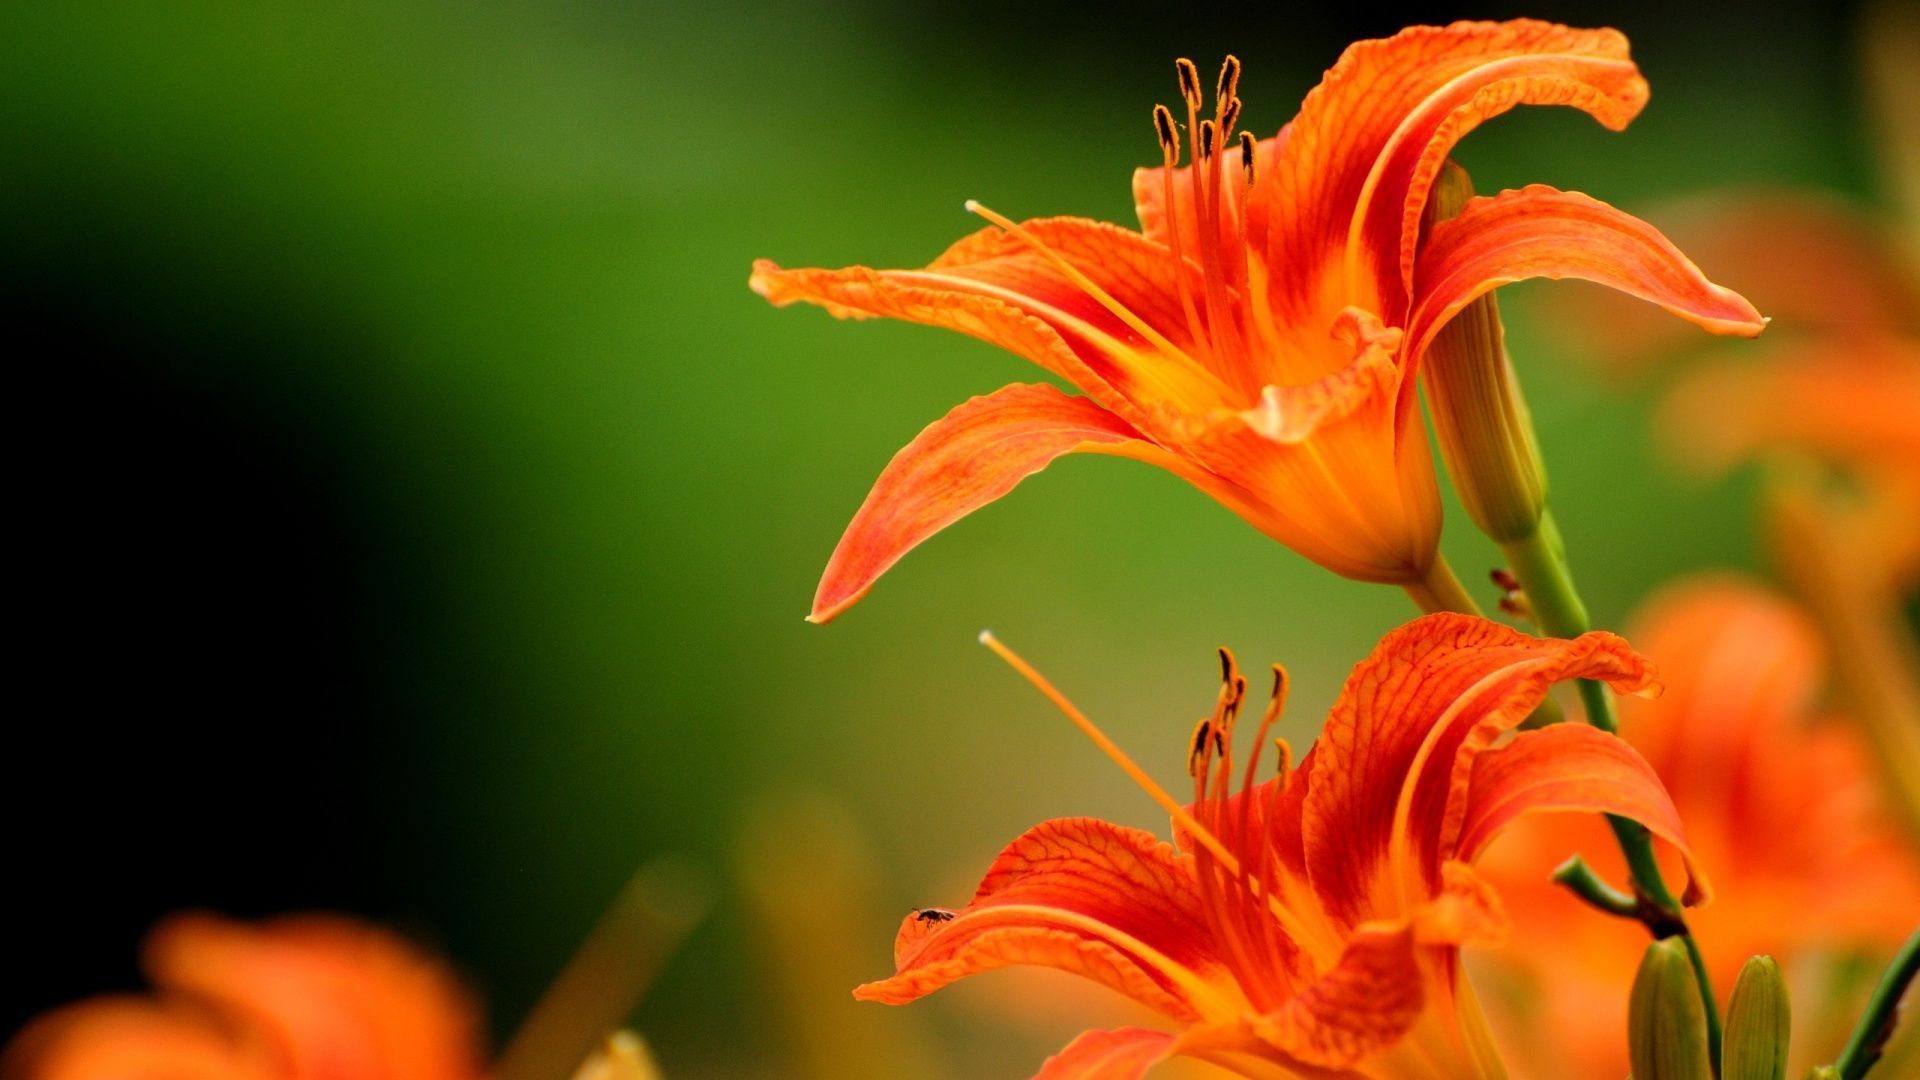 lilies-orange-flowers-1920x1080.jpg